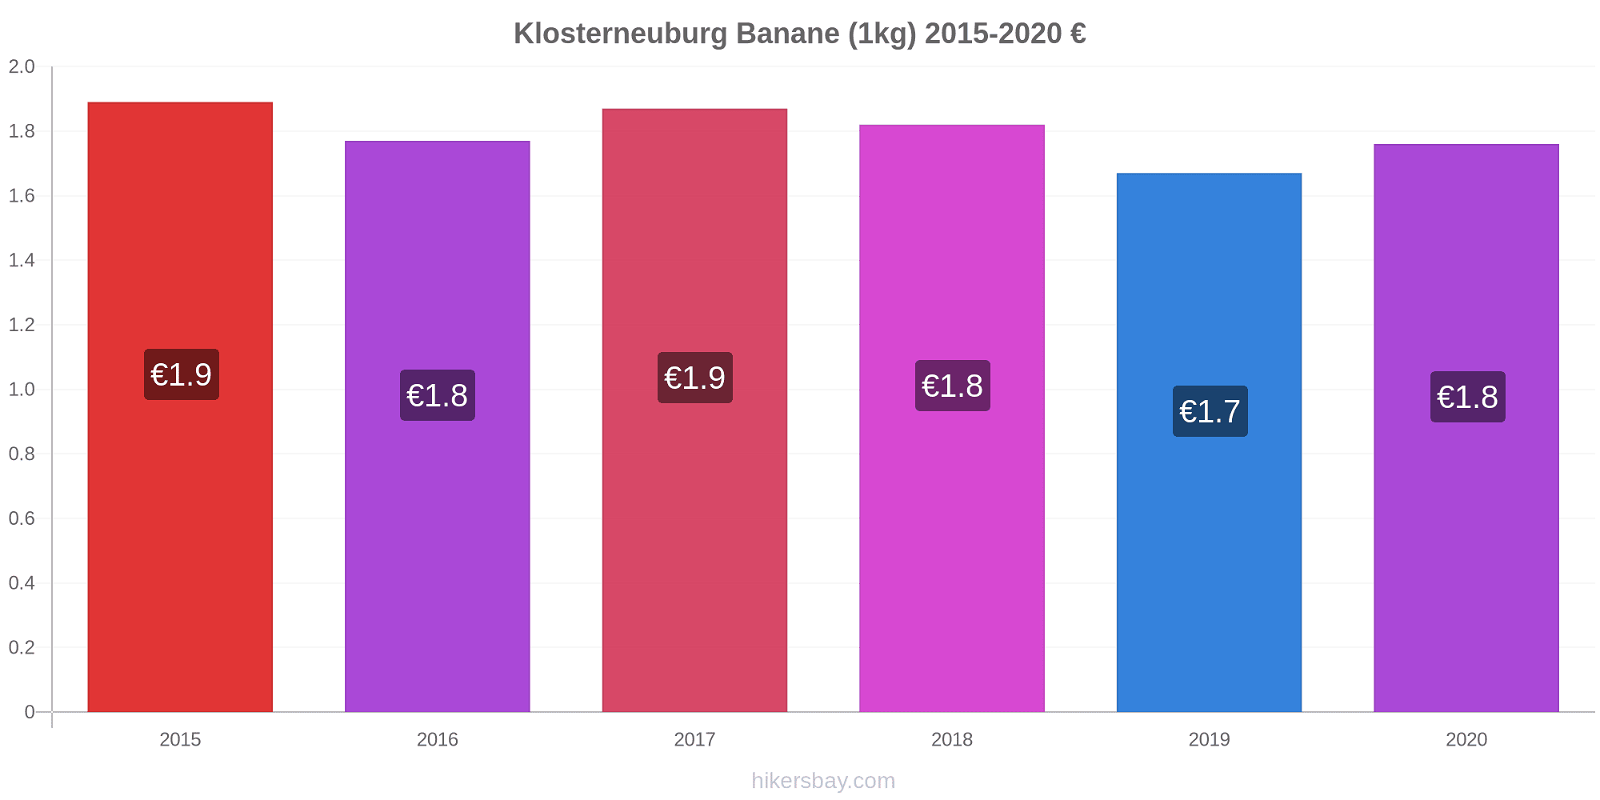 Klosterneuburg variazioni di prezzo Banana (1kg) hikersbay.com